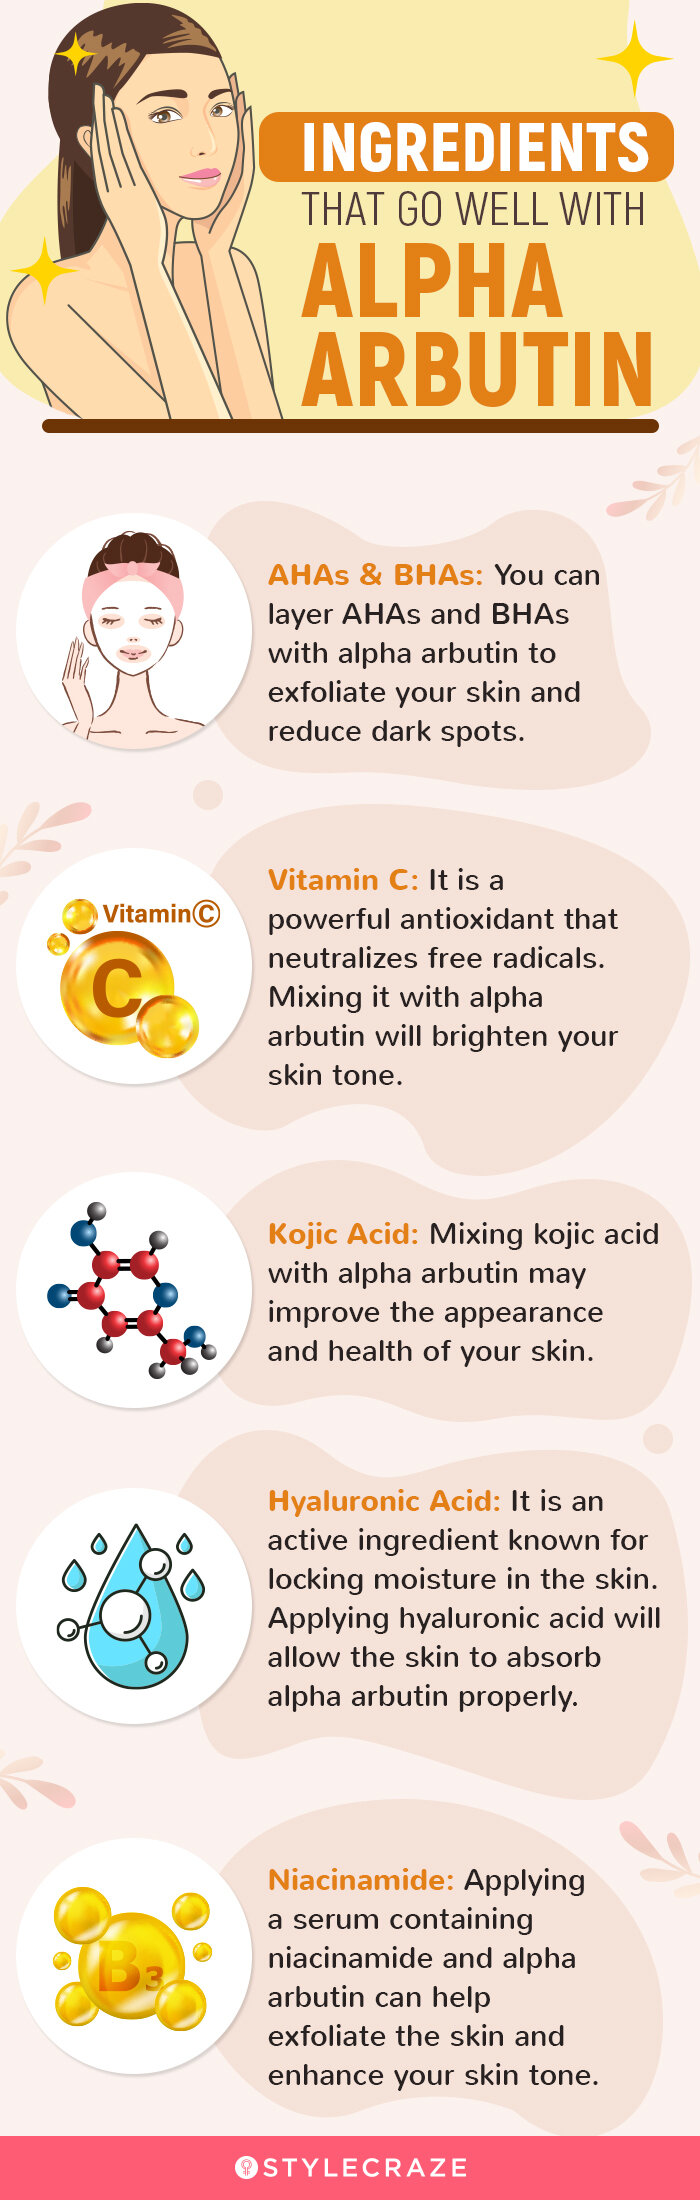 alpha arbutin for skin (infographic)